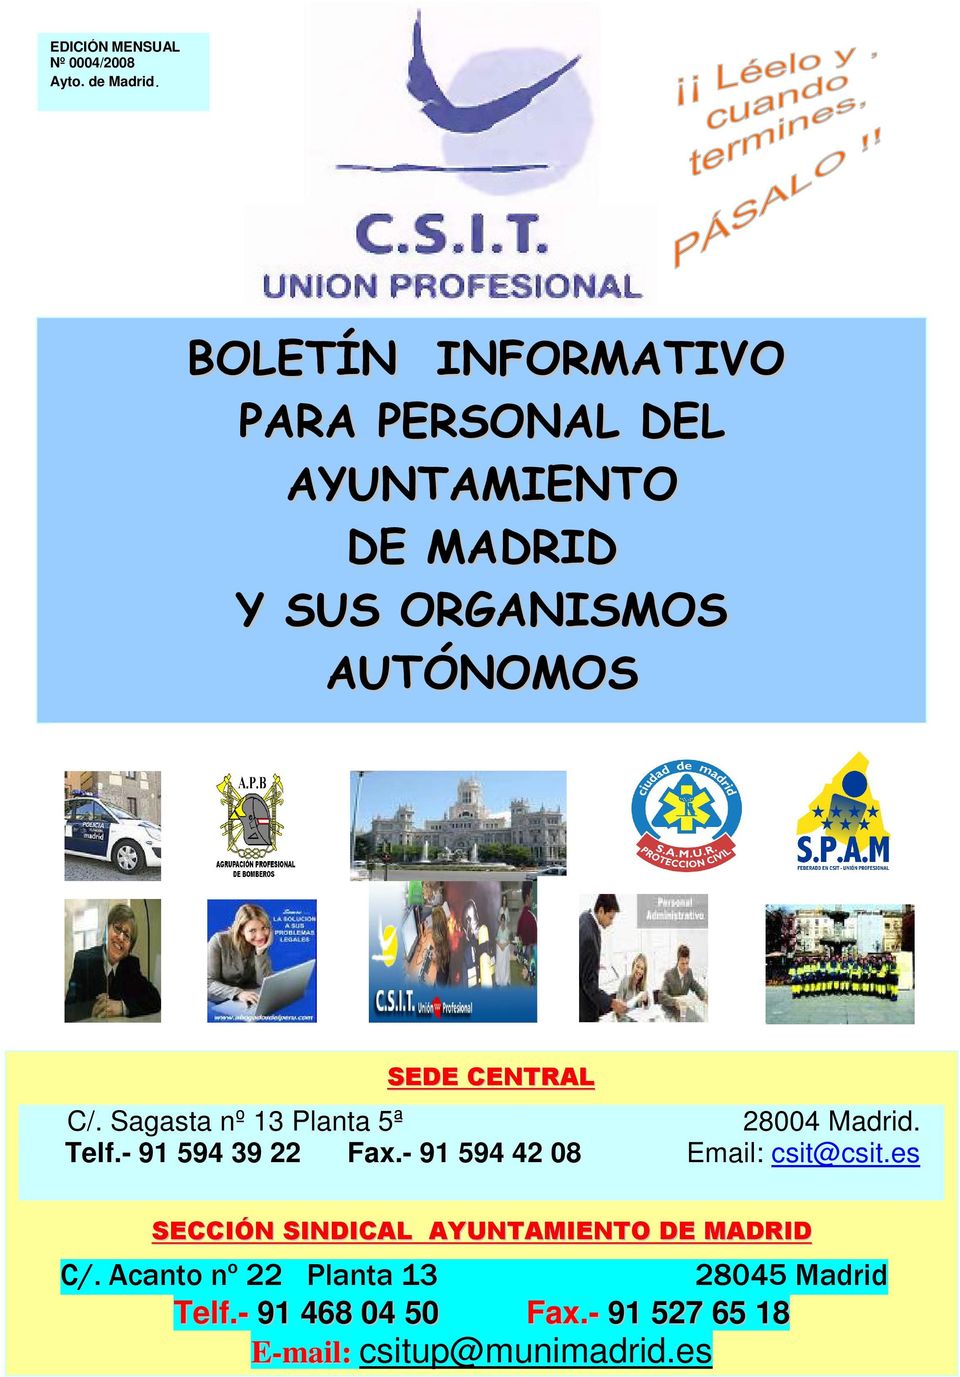 CENTRAL C/. Sagasta nº 13 Planta 5ª 28004 Madrid. Telf.- 91 594 39 22 Fax.